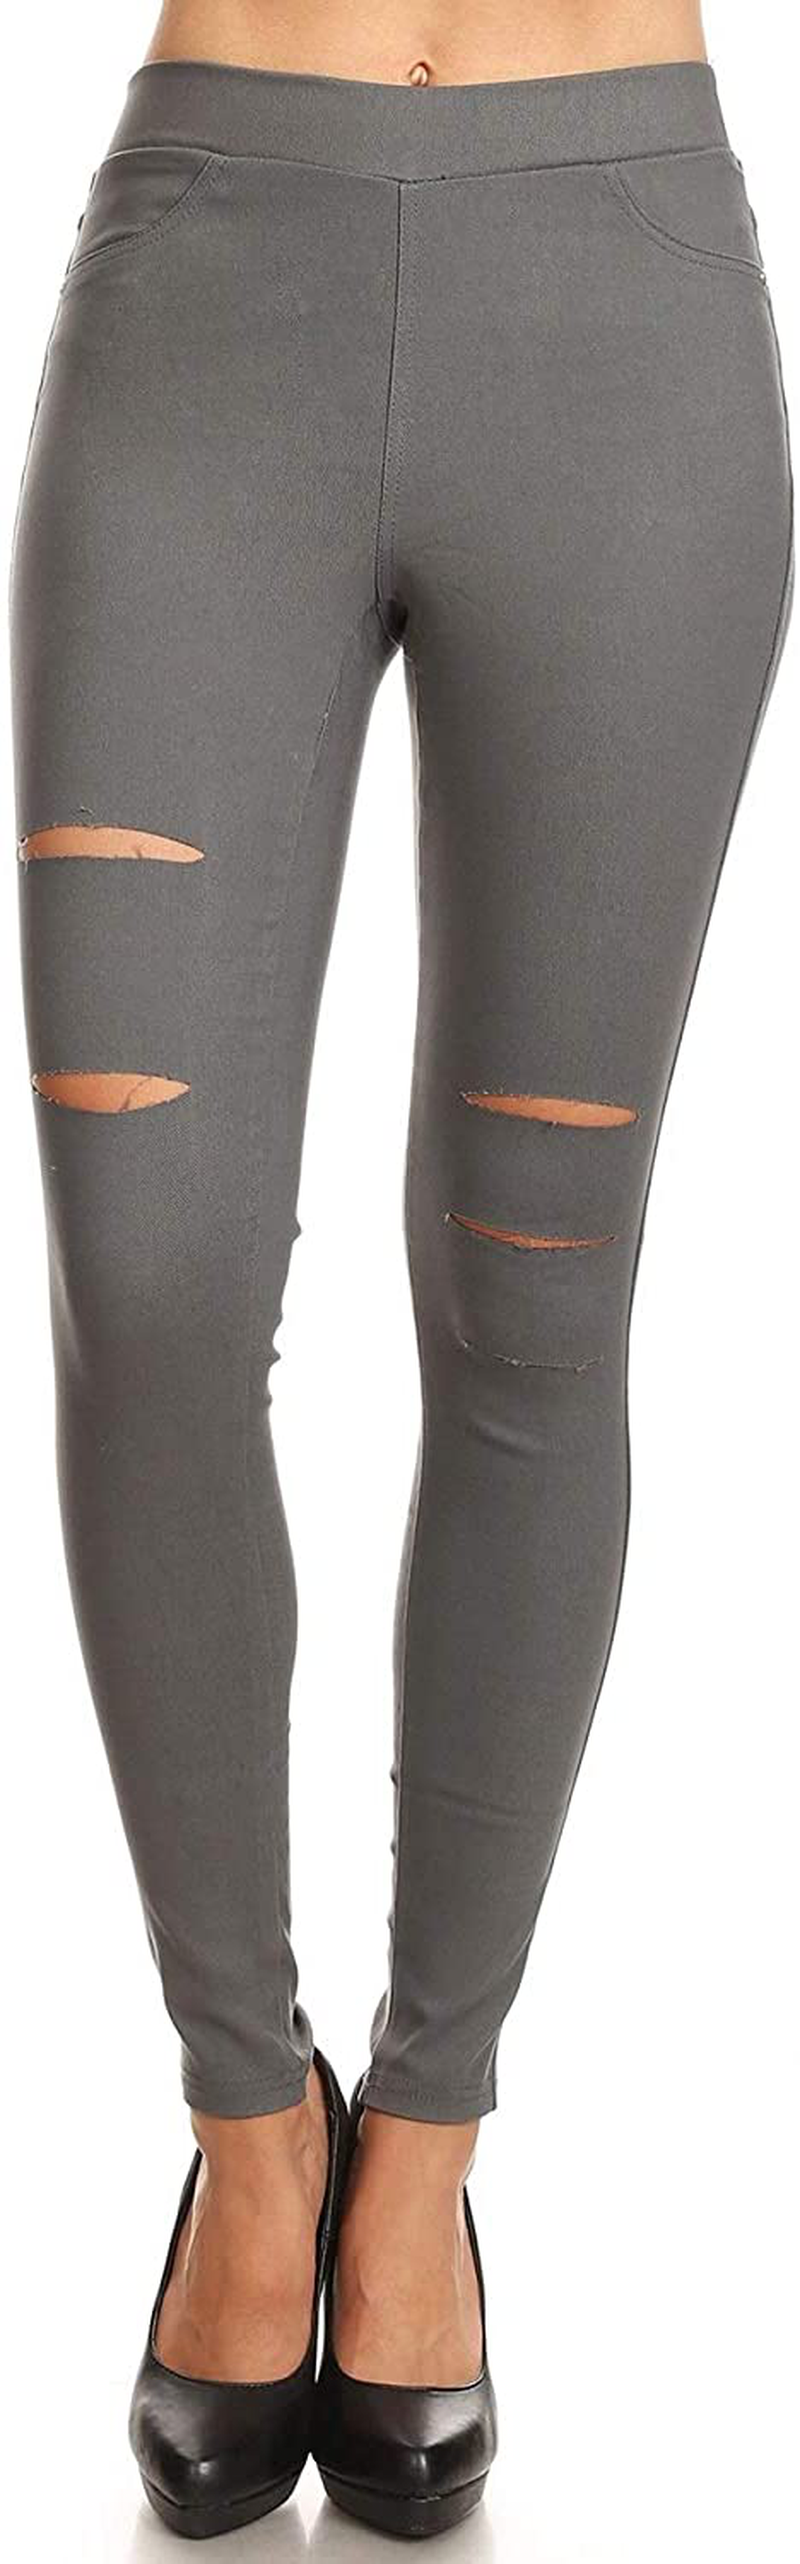 Jvini Women's Pull-On Ripped Distressed Stretch Legging Pants Denim Jean Reg-Plus Size